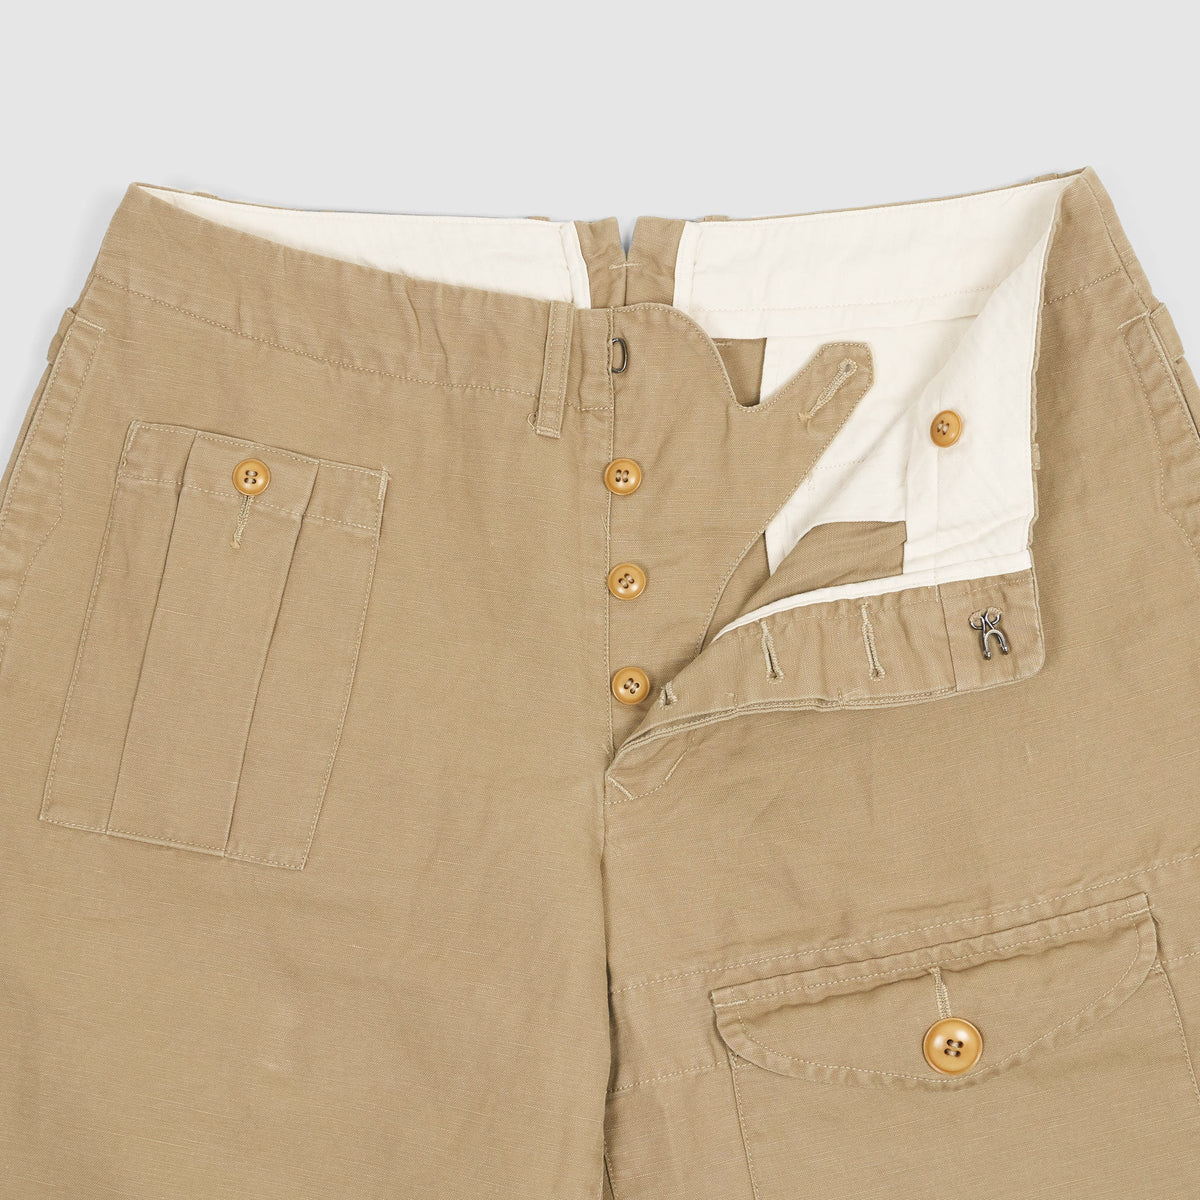 Haversack Linen/Cotton Military Cargo Chino Pants